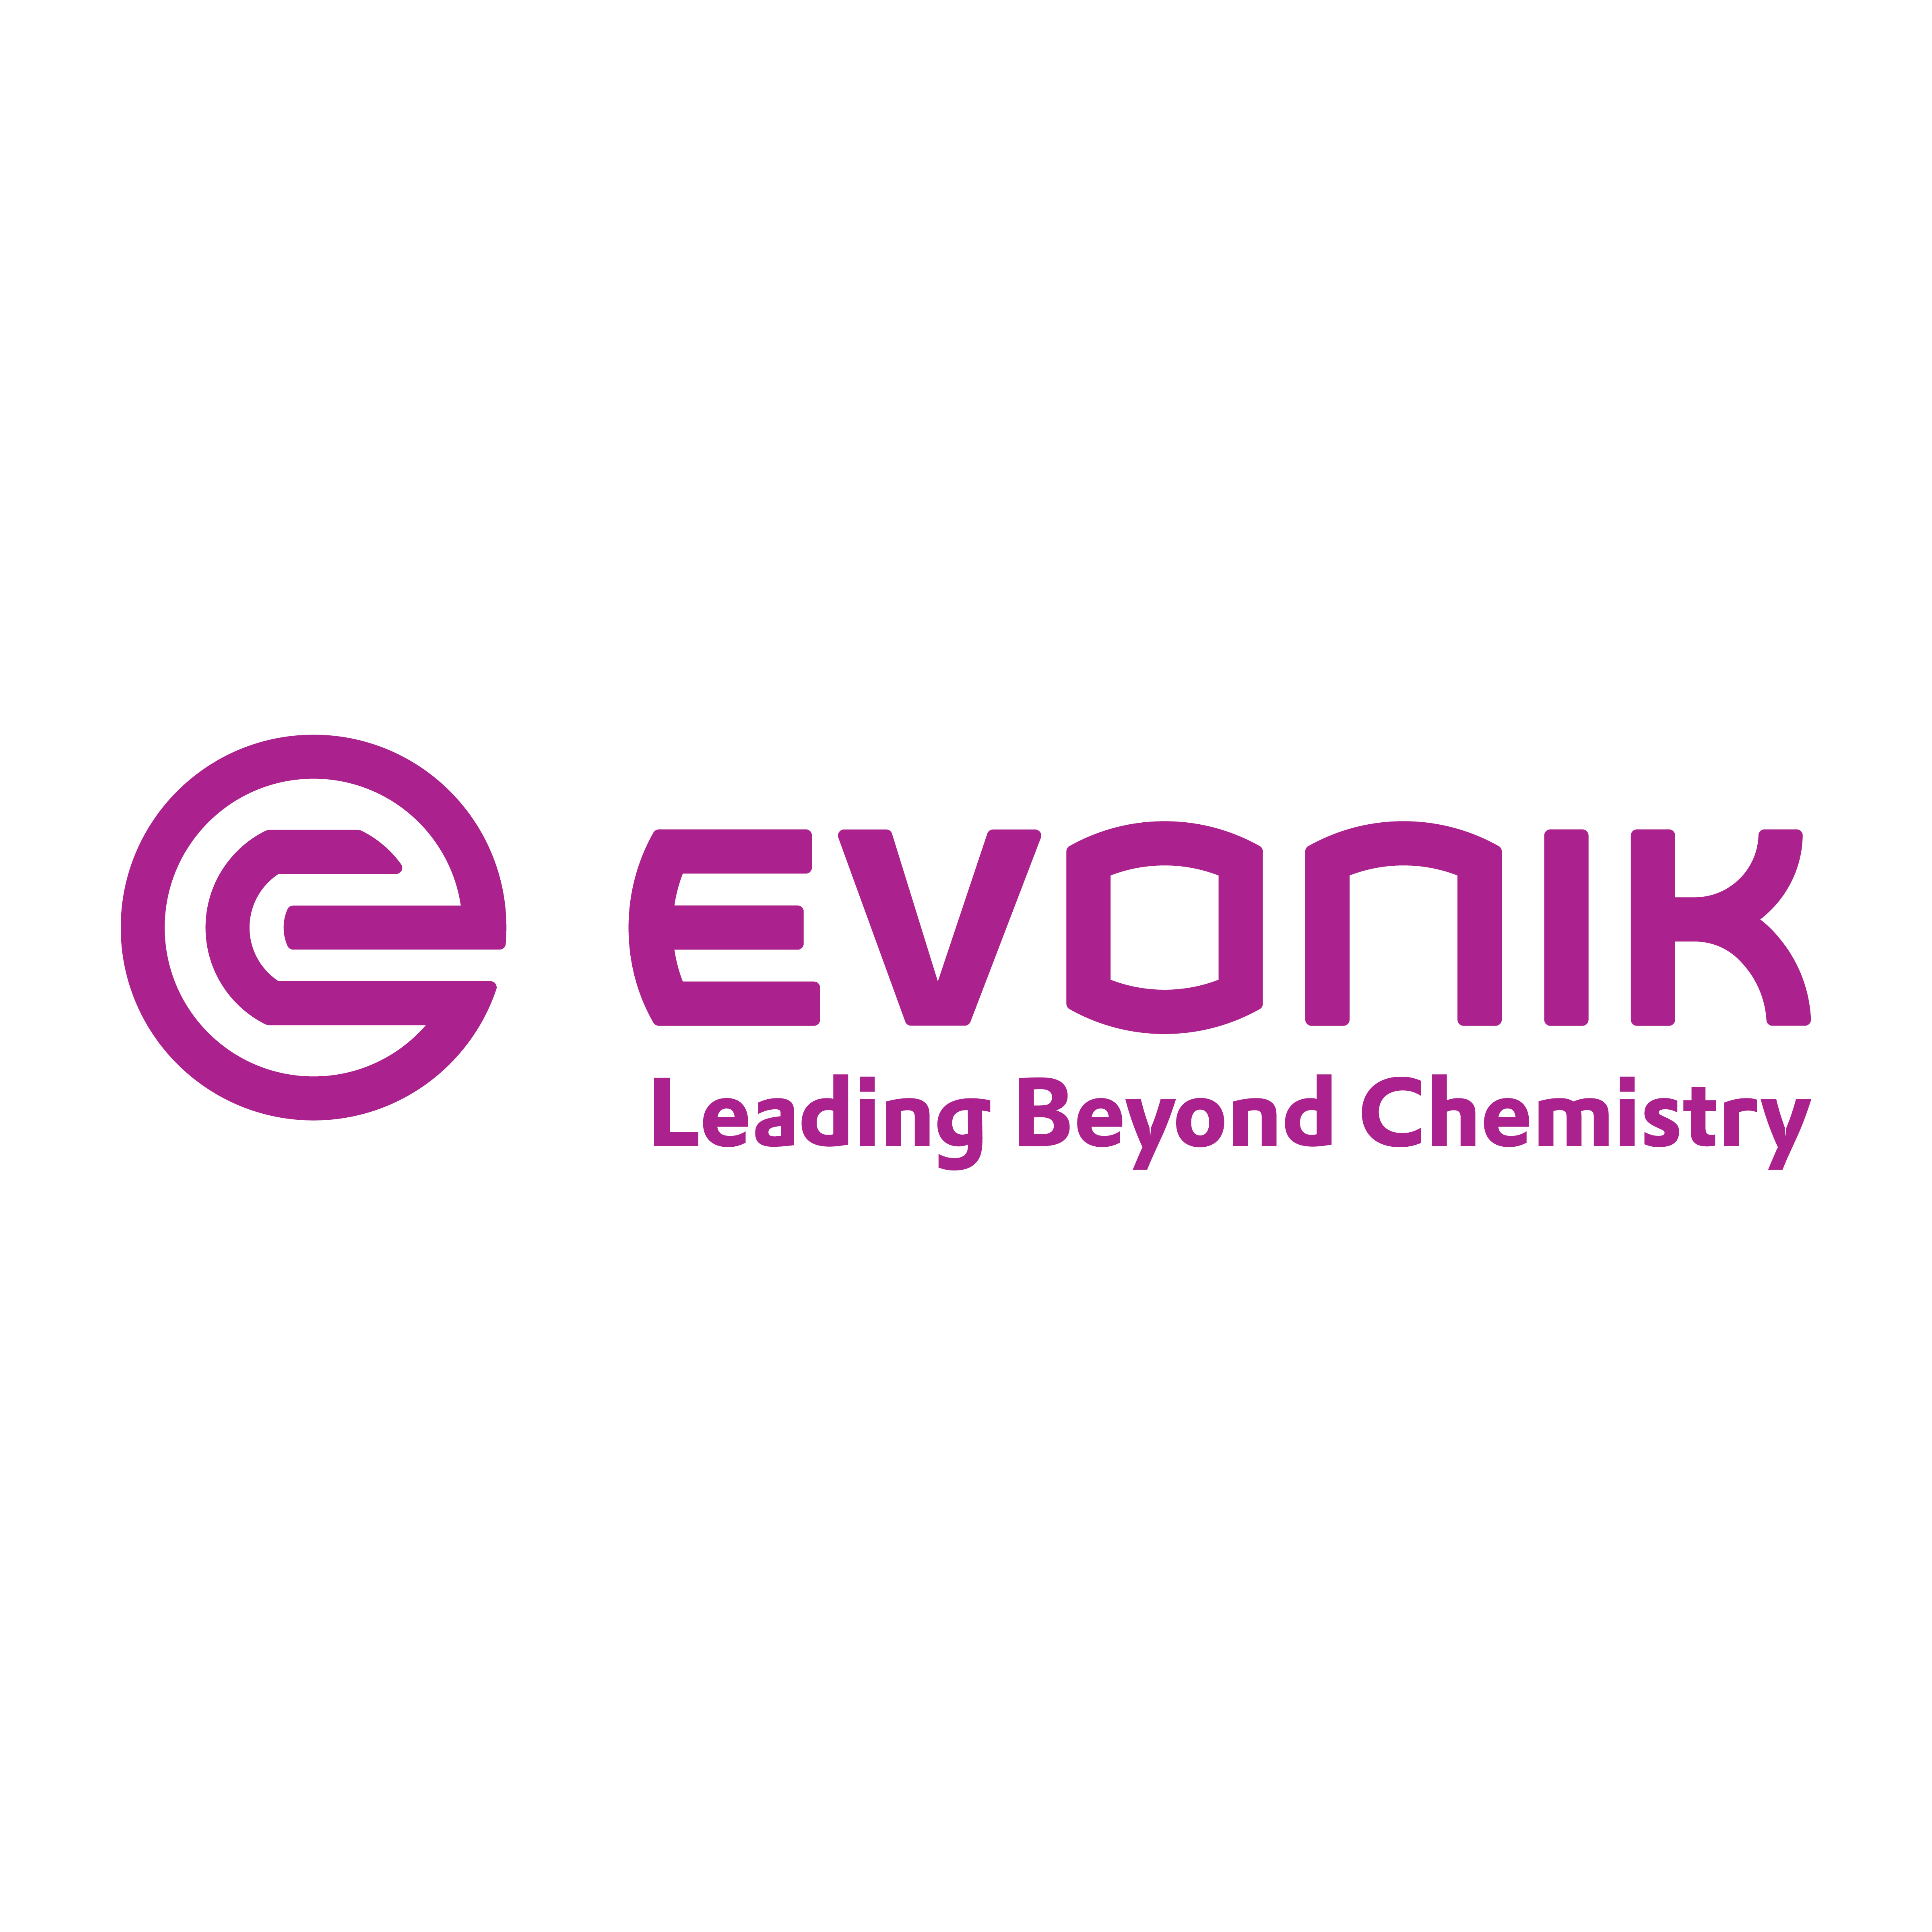 Evonik logo with tagline "leading beyond chemistry"l